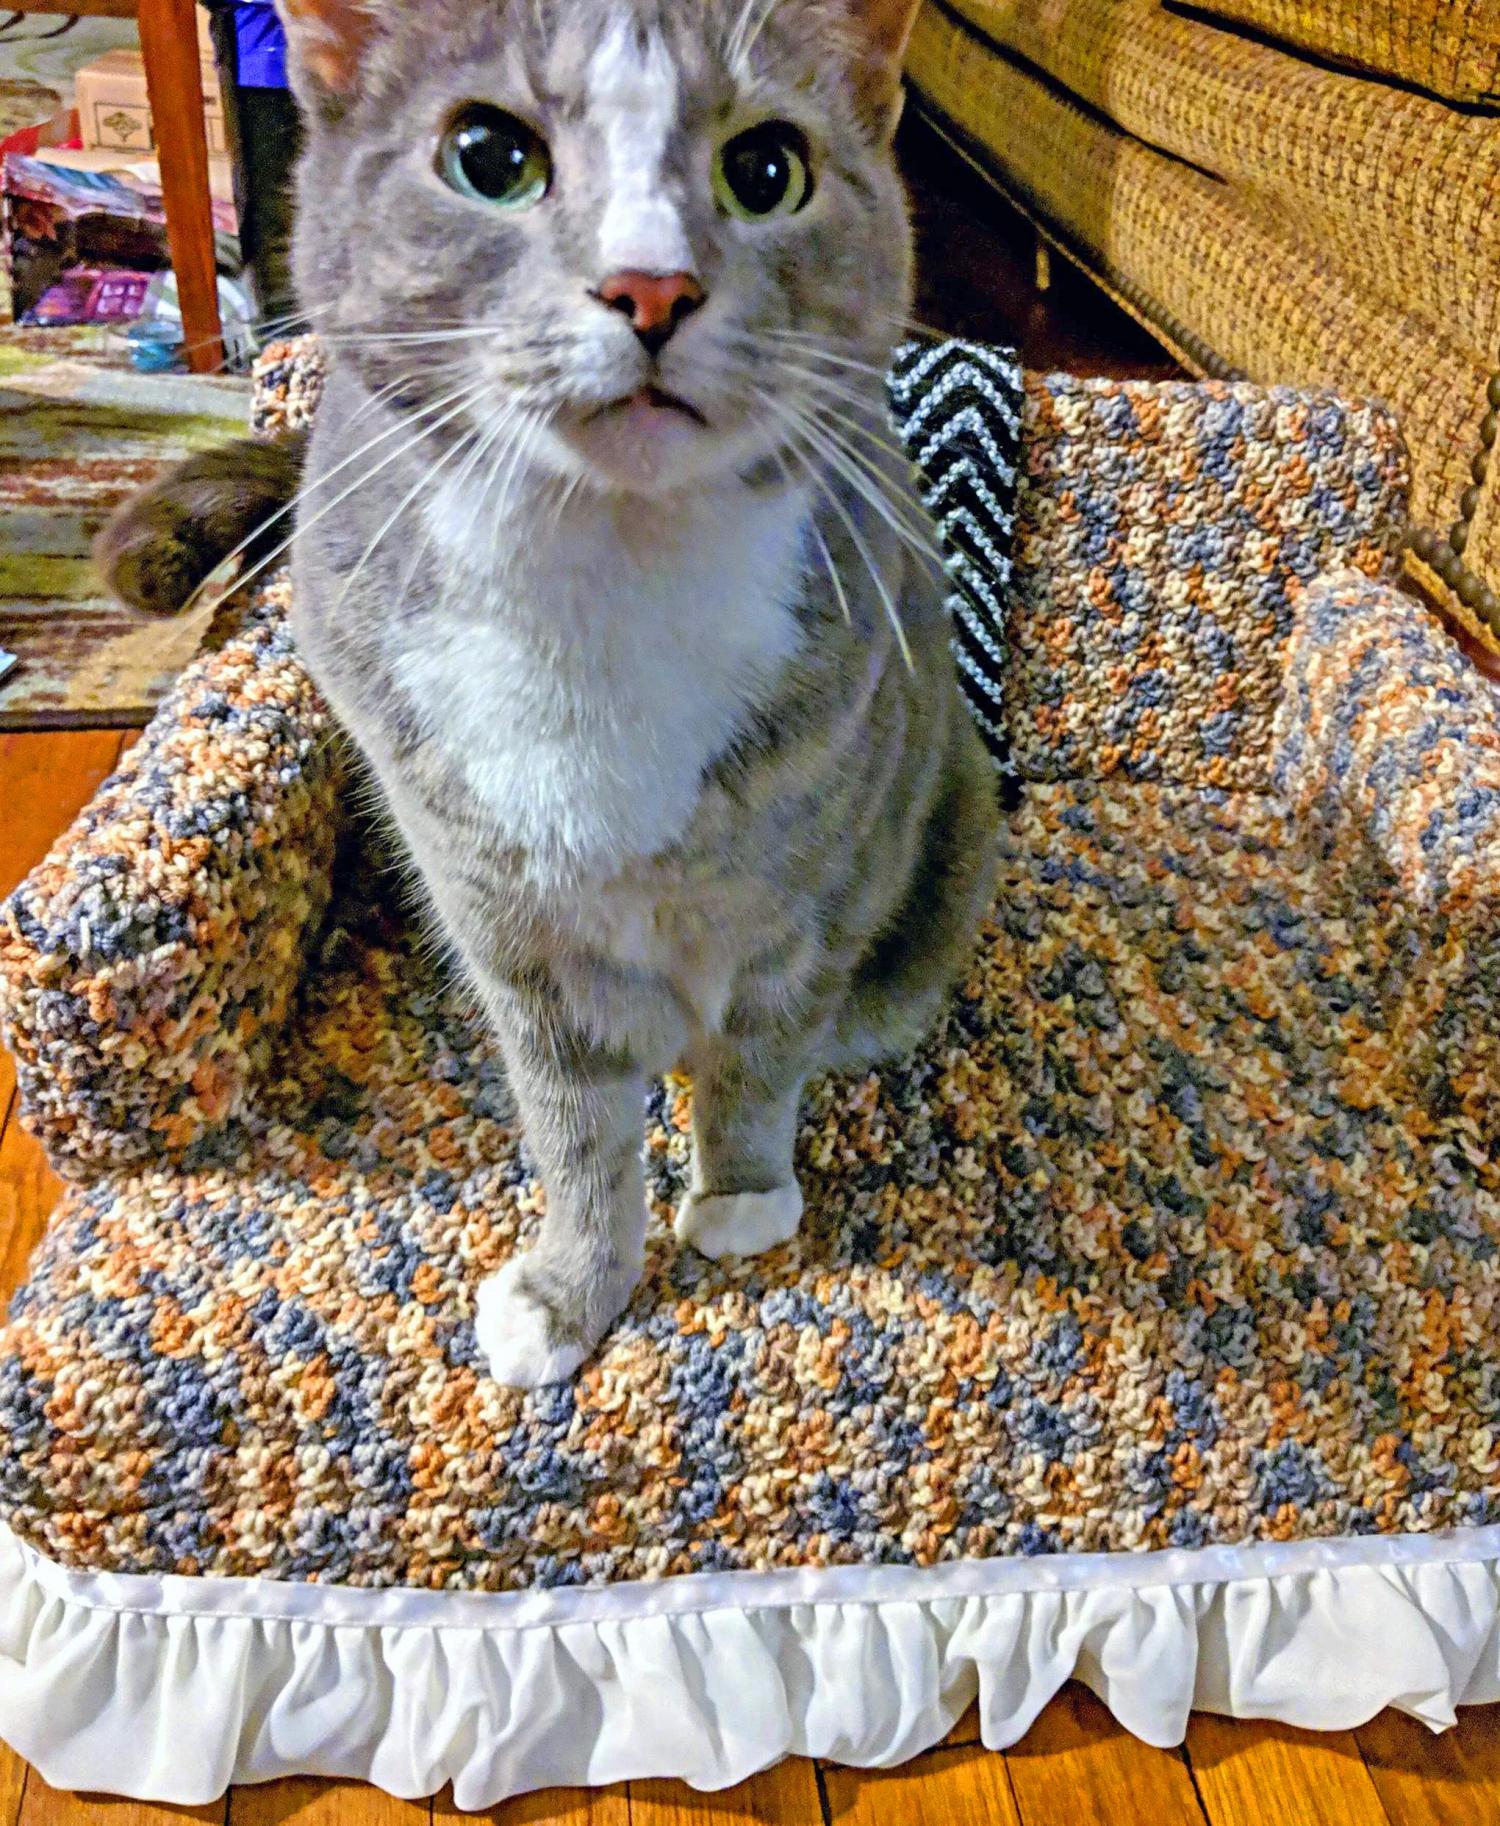 Tiny Crochet Cat Couches - Mini Crochet Cat Sofa For Your Kitty